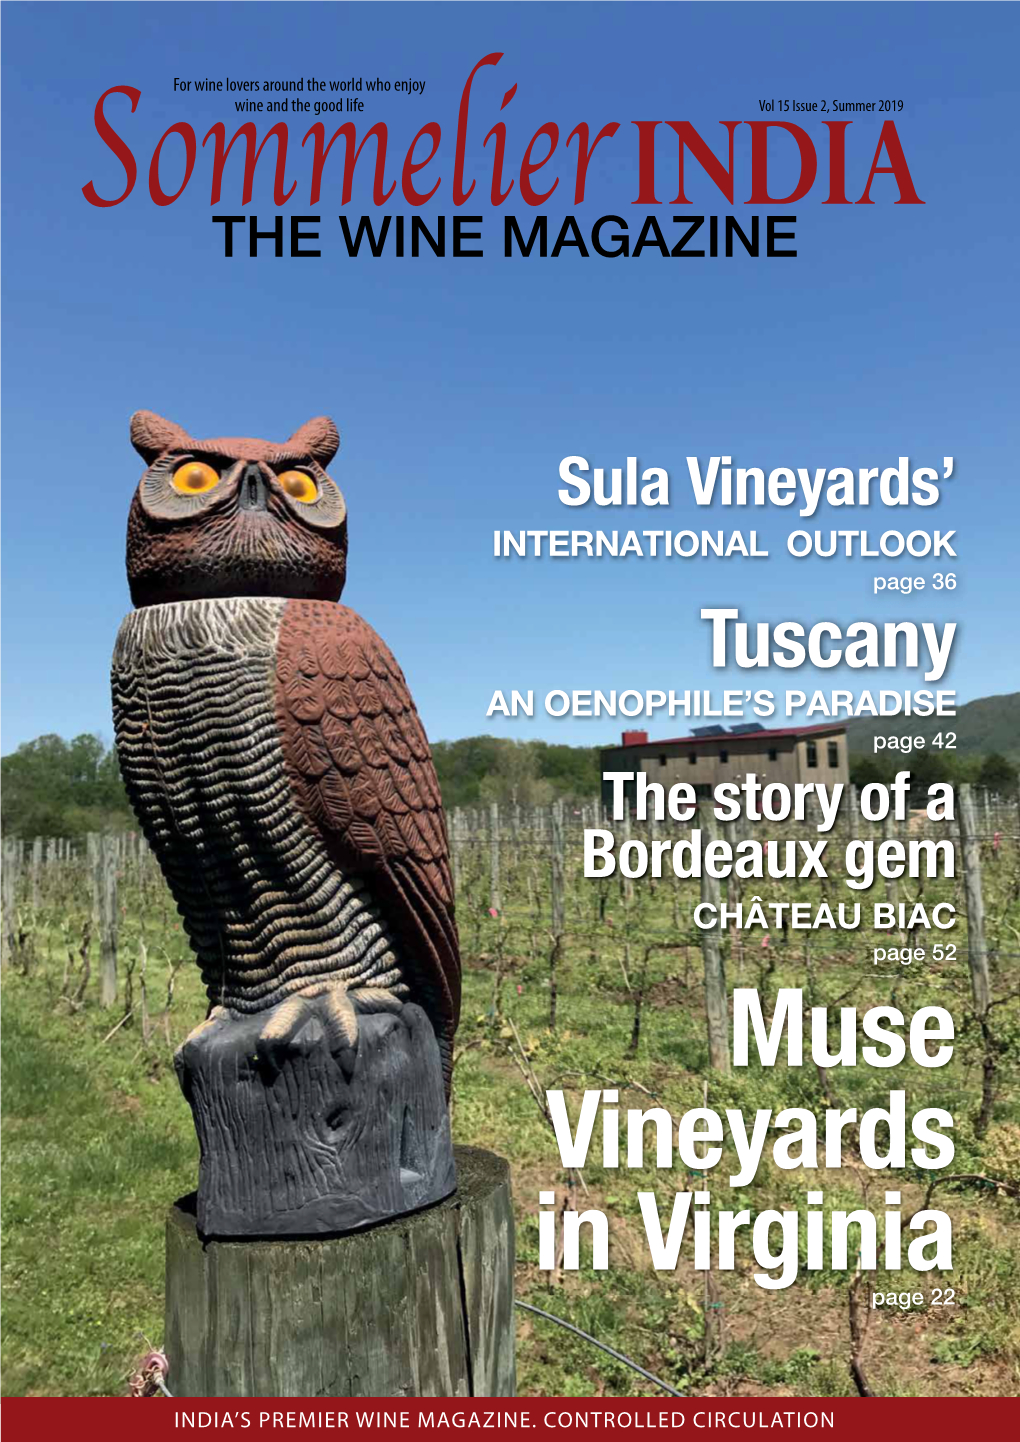 Muse Vineyards in Virginia Page 22